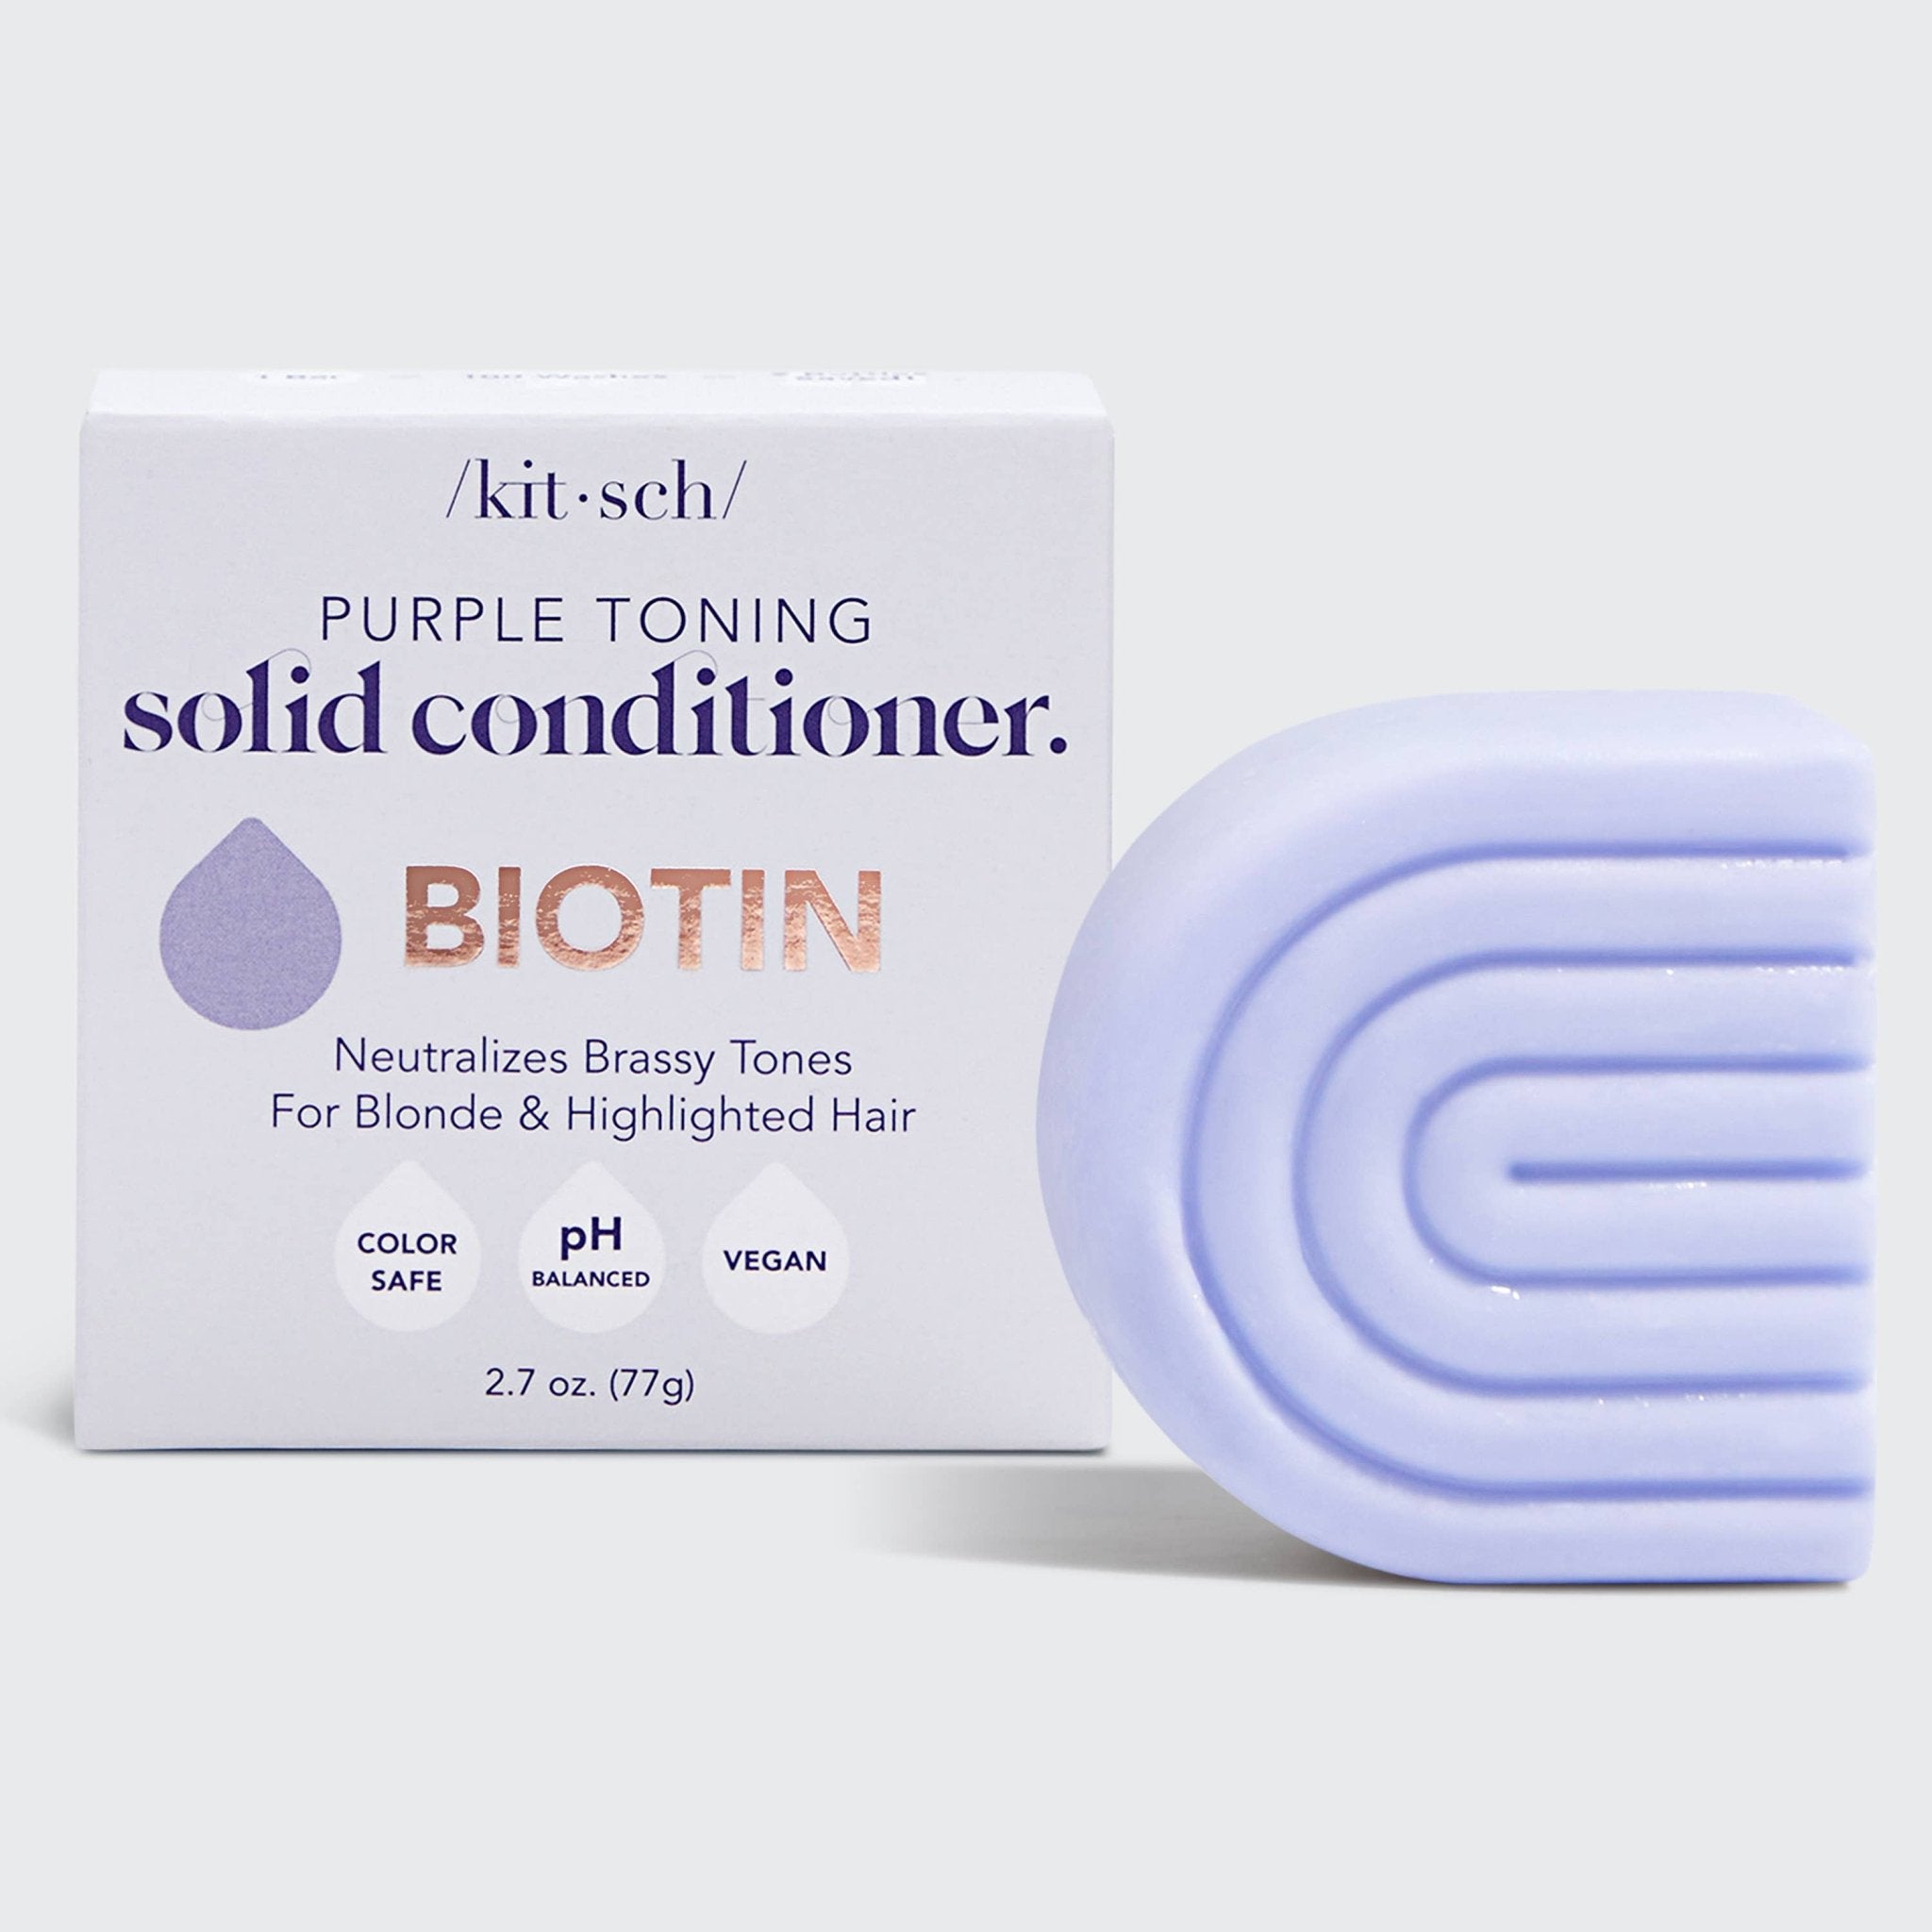 KITSCH Purple Toning Conditioner Bar With Biotin